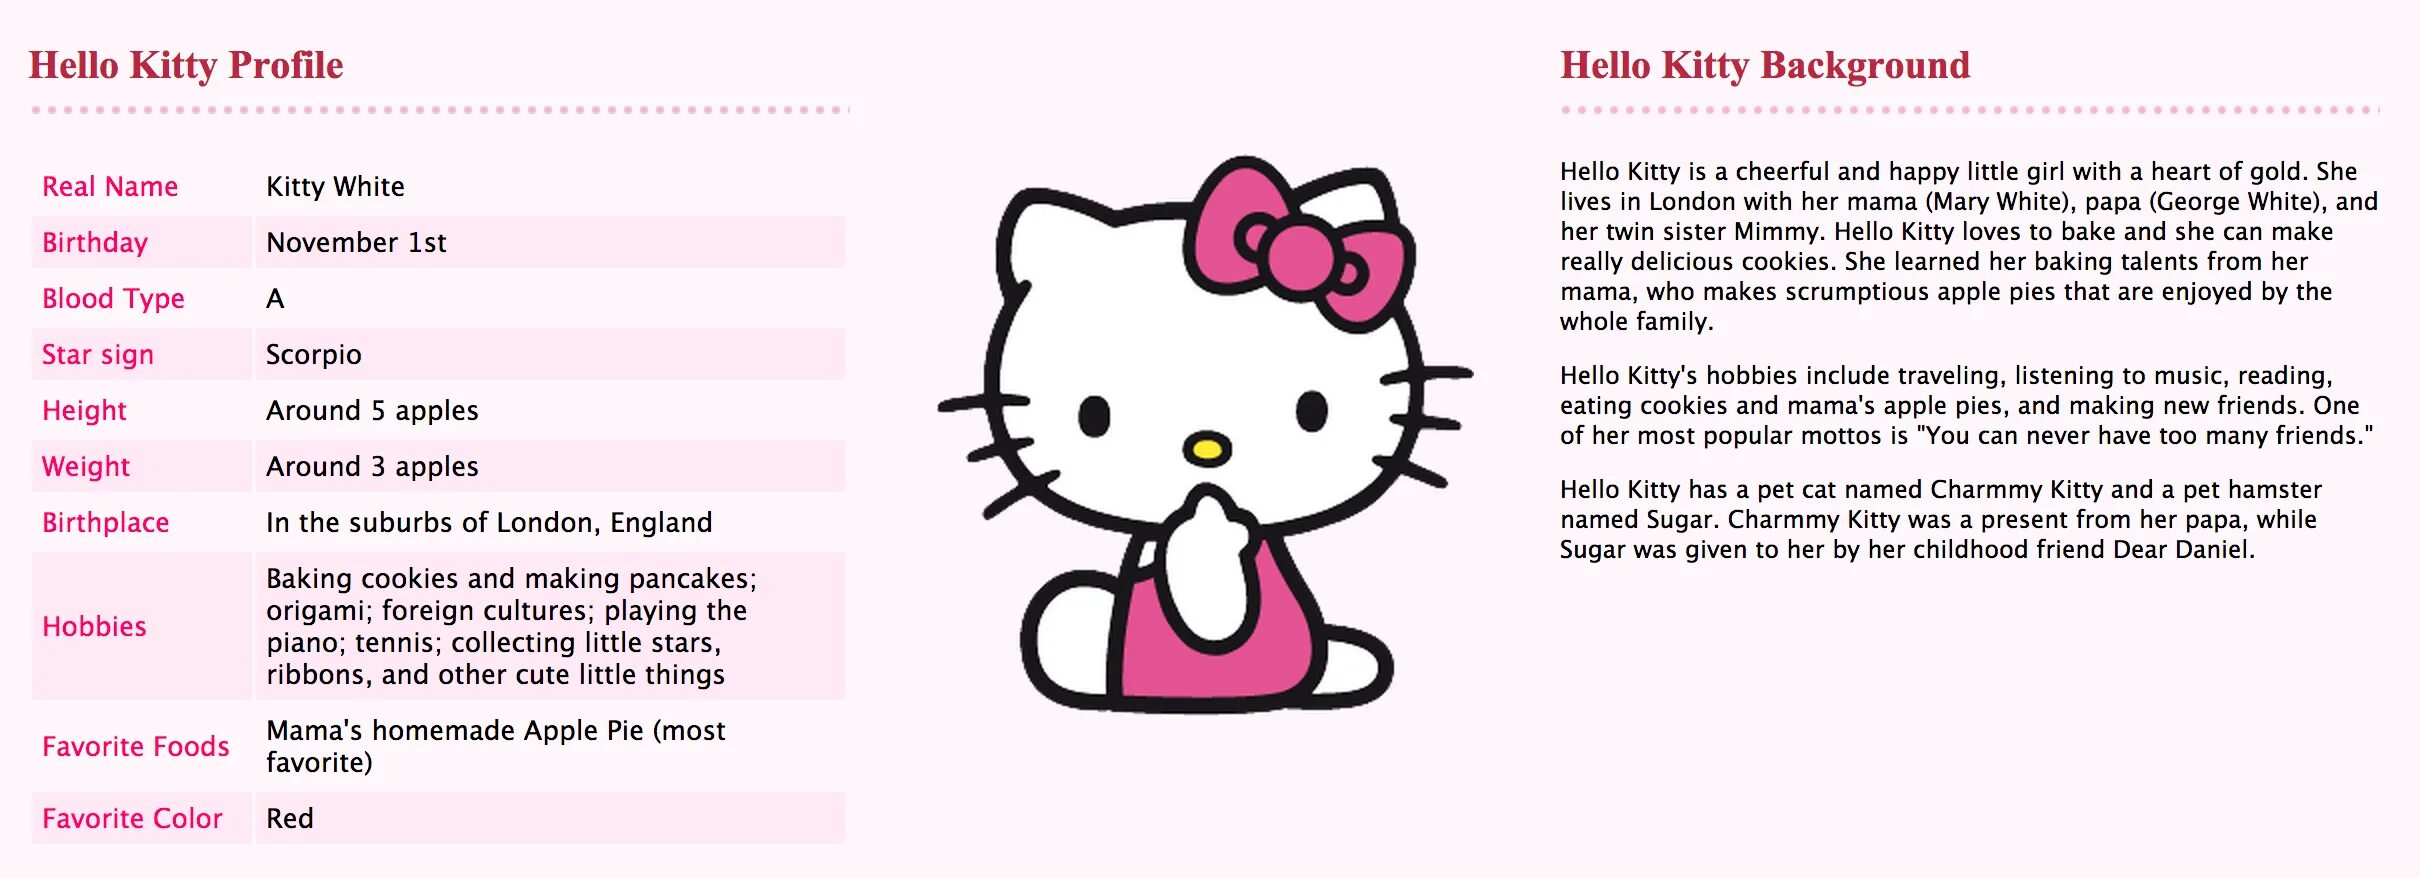 Хеллоу Китти имена. Hello Kitty персонажи с именами. Hello Kitty с описанием. Хеллоу Китти и друзья имена. Почему хеллоу